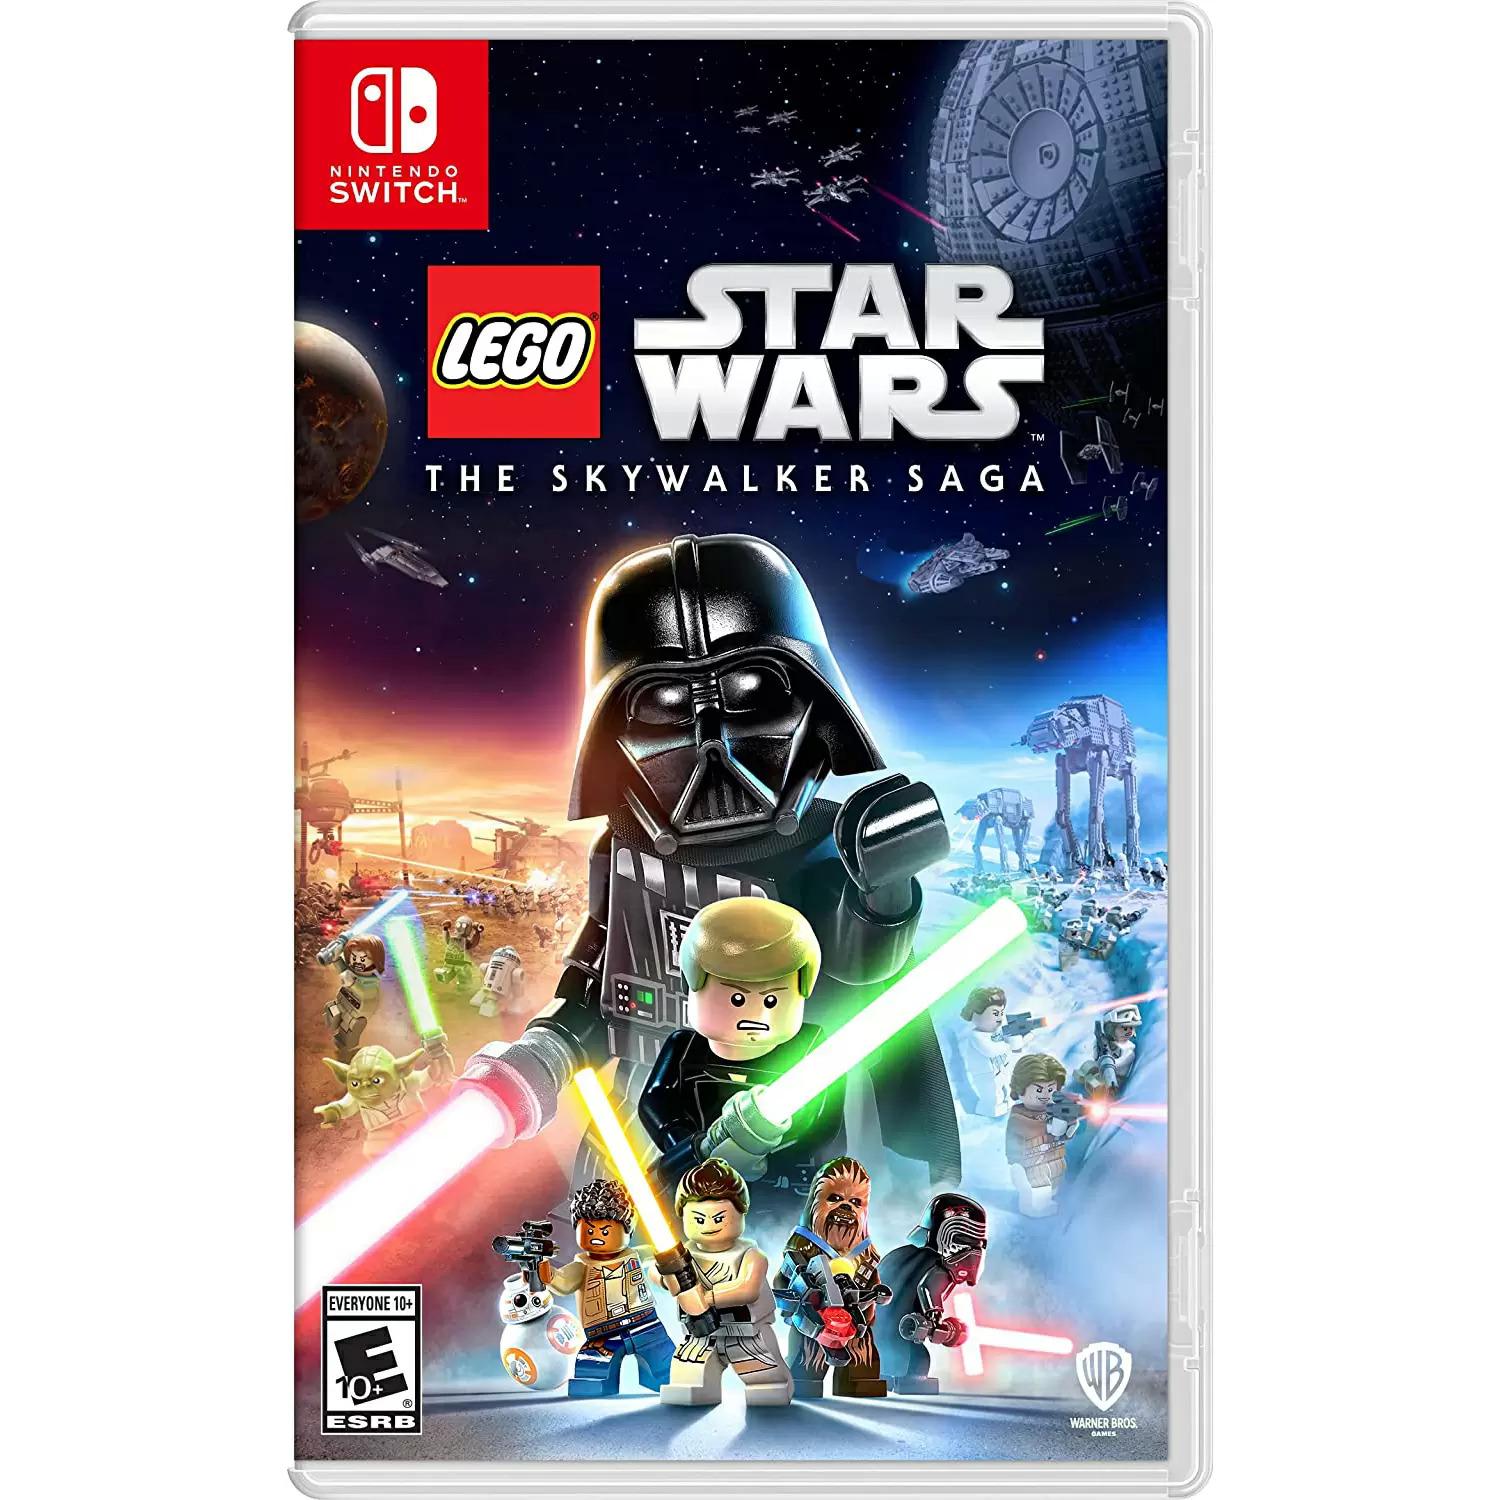 LEGO Star Wars The Skywalker Saga Nintendo Switch for $44.99 Shipped